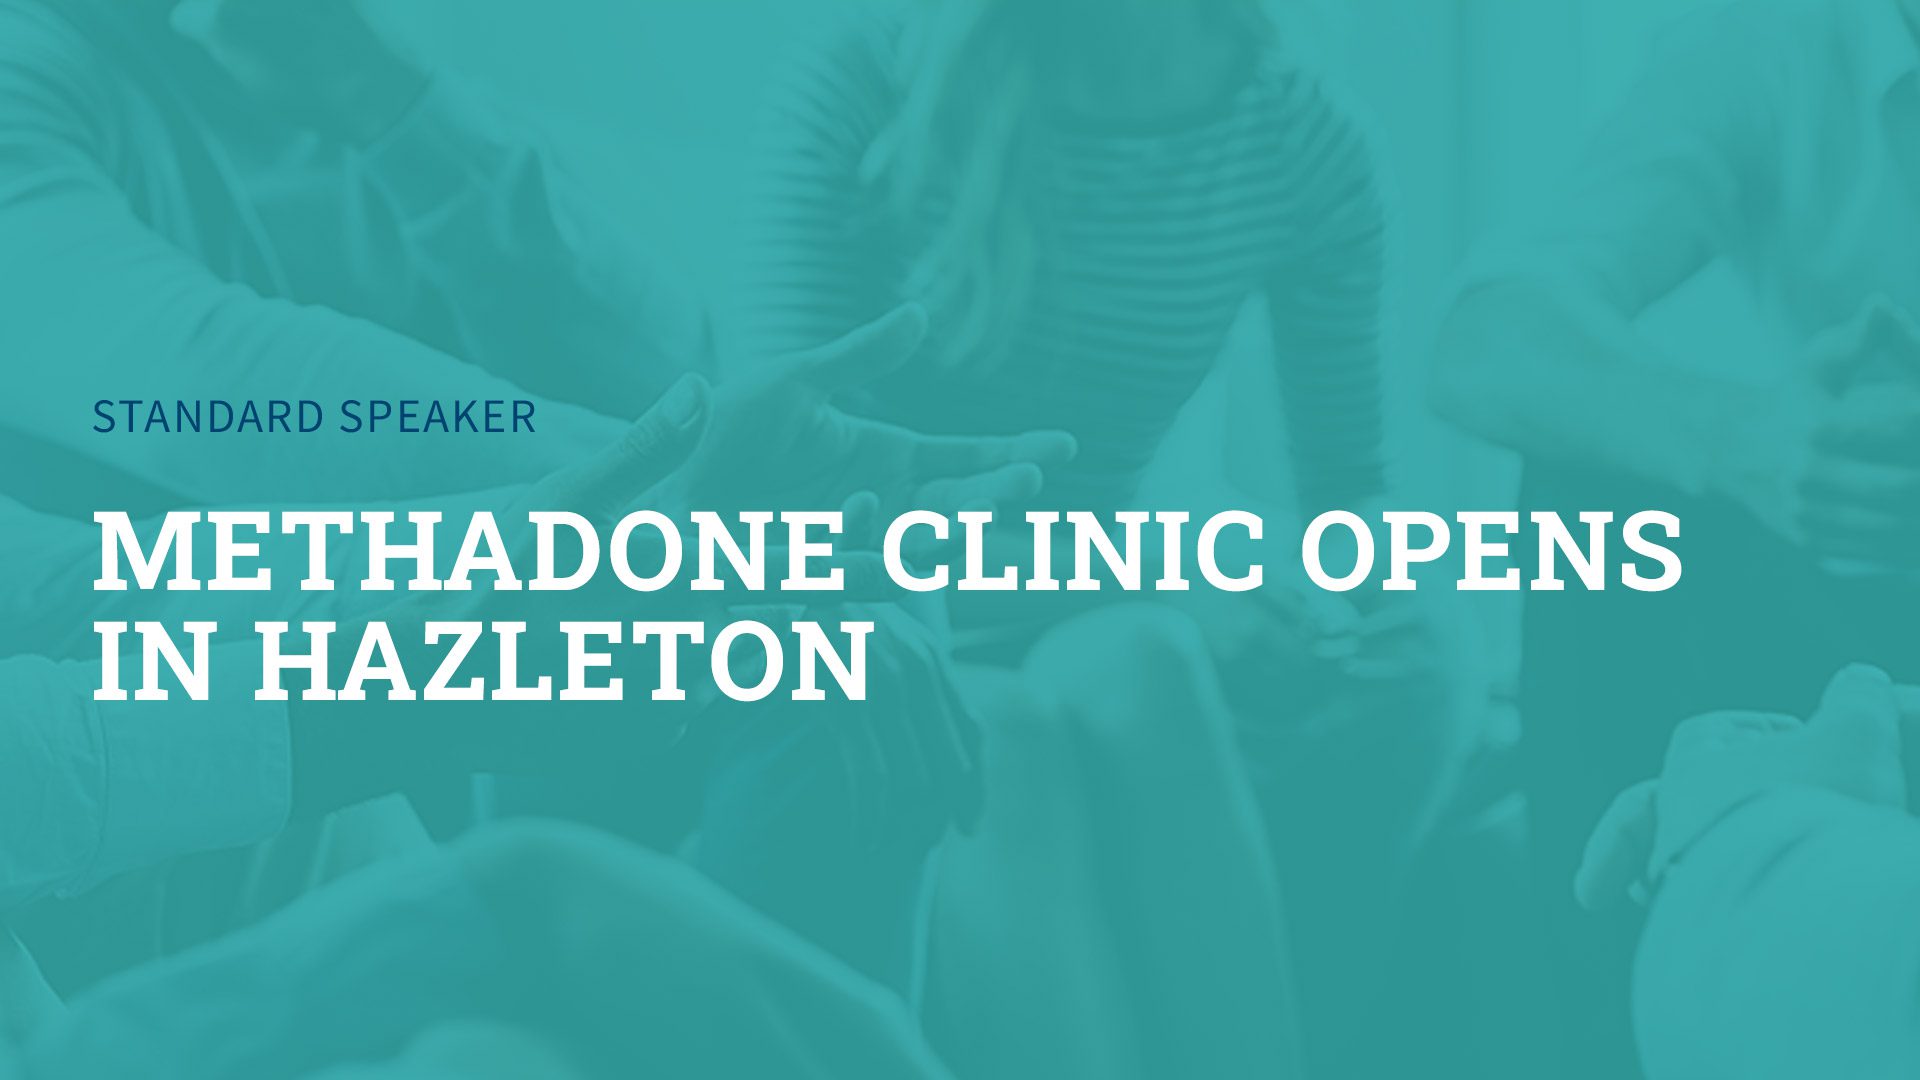 Methadone clinic opens in Hazleton